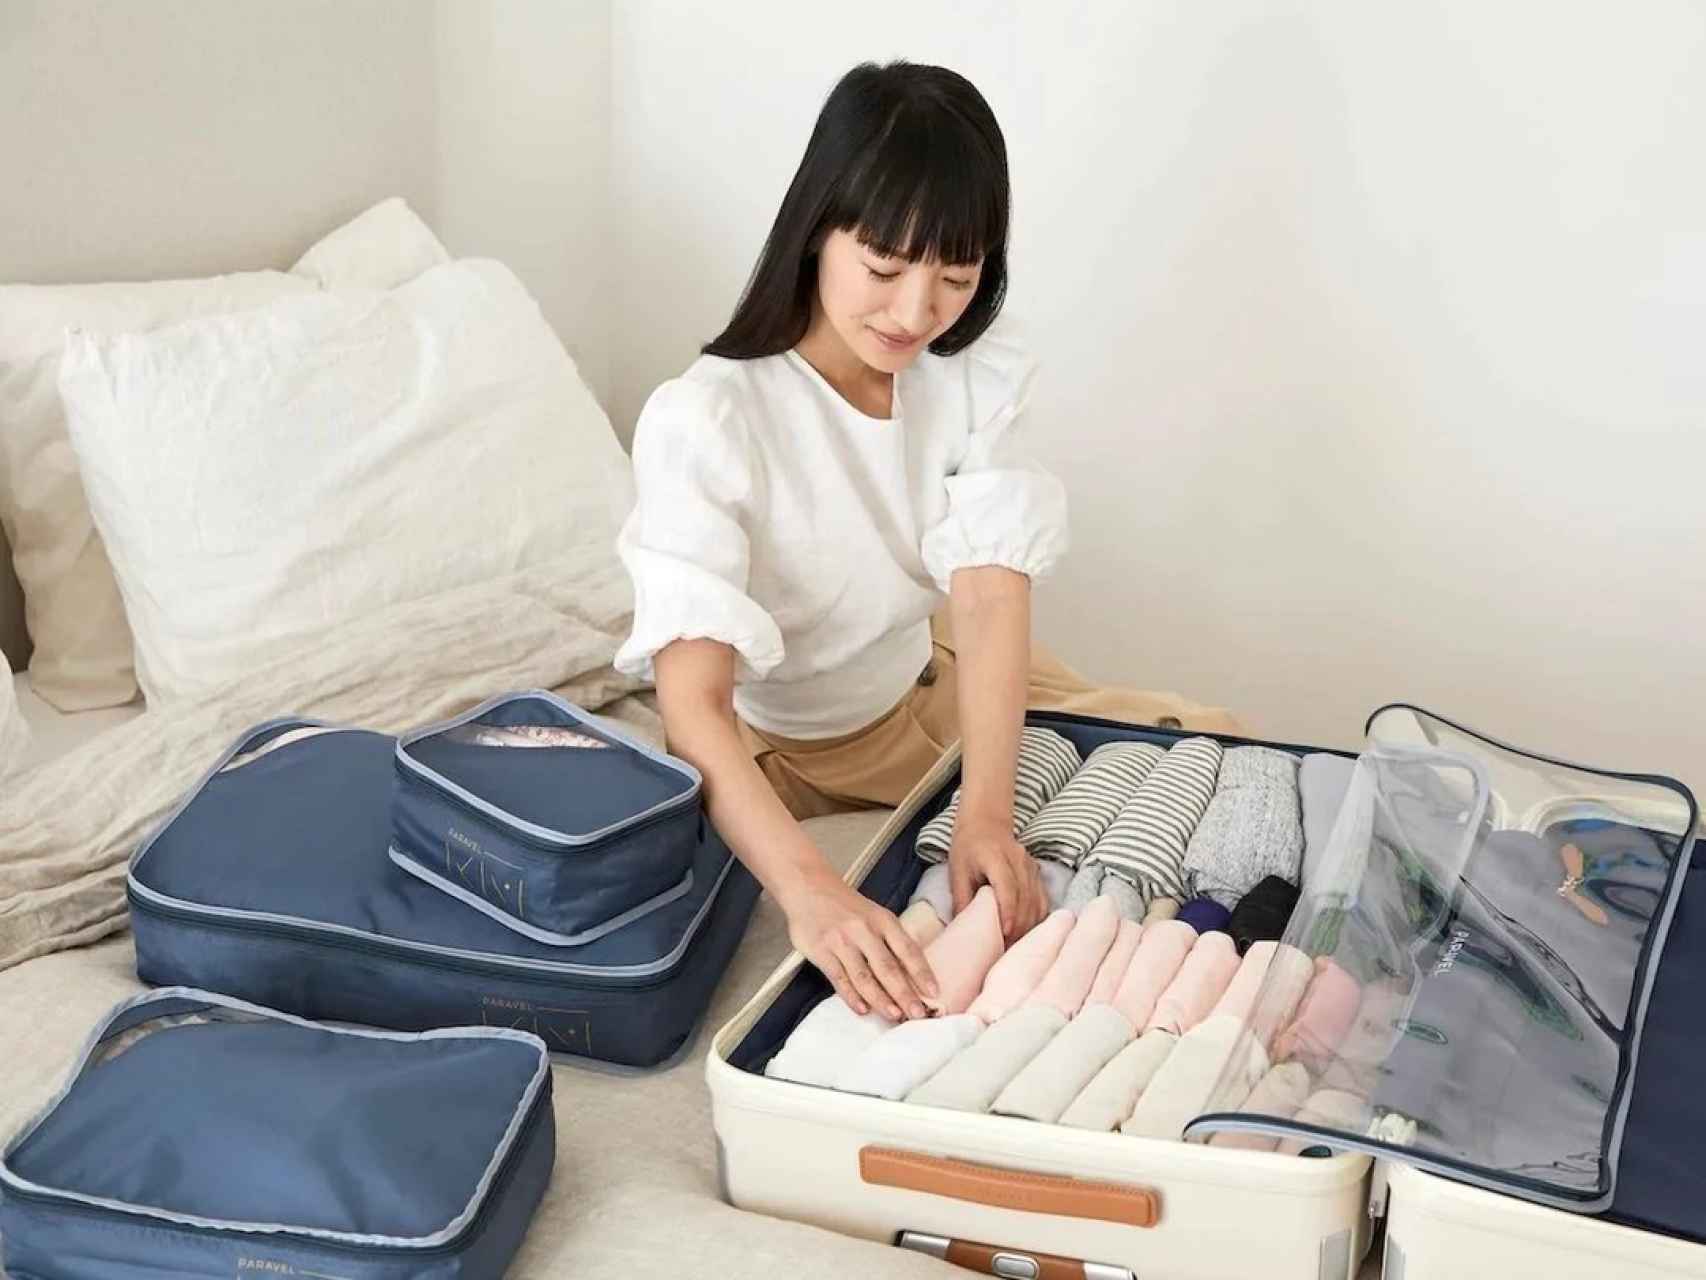 La japonesa, ordenando su maleta.